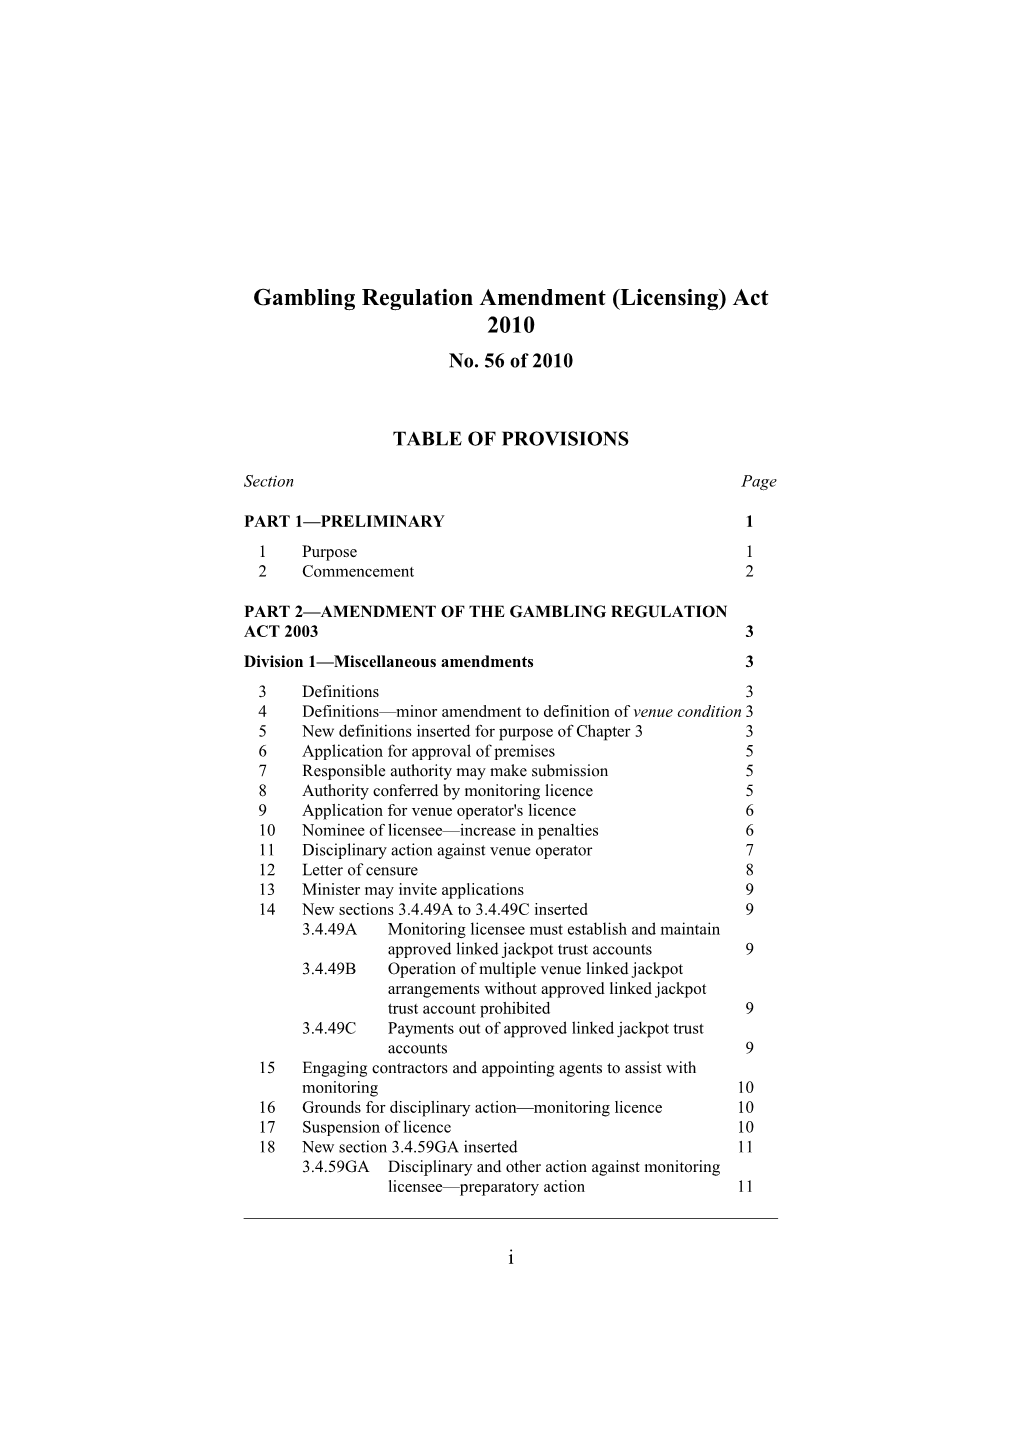 Gambling Regulation Amendment (Licensing) Act 2010